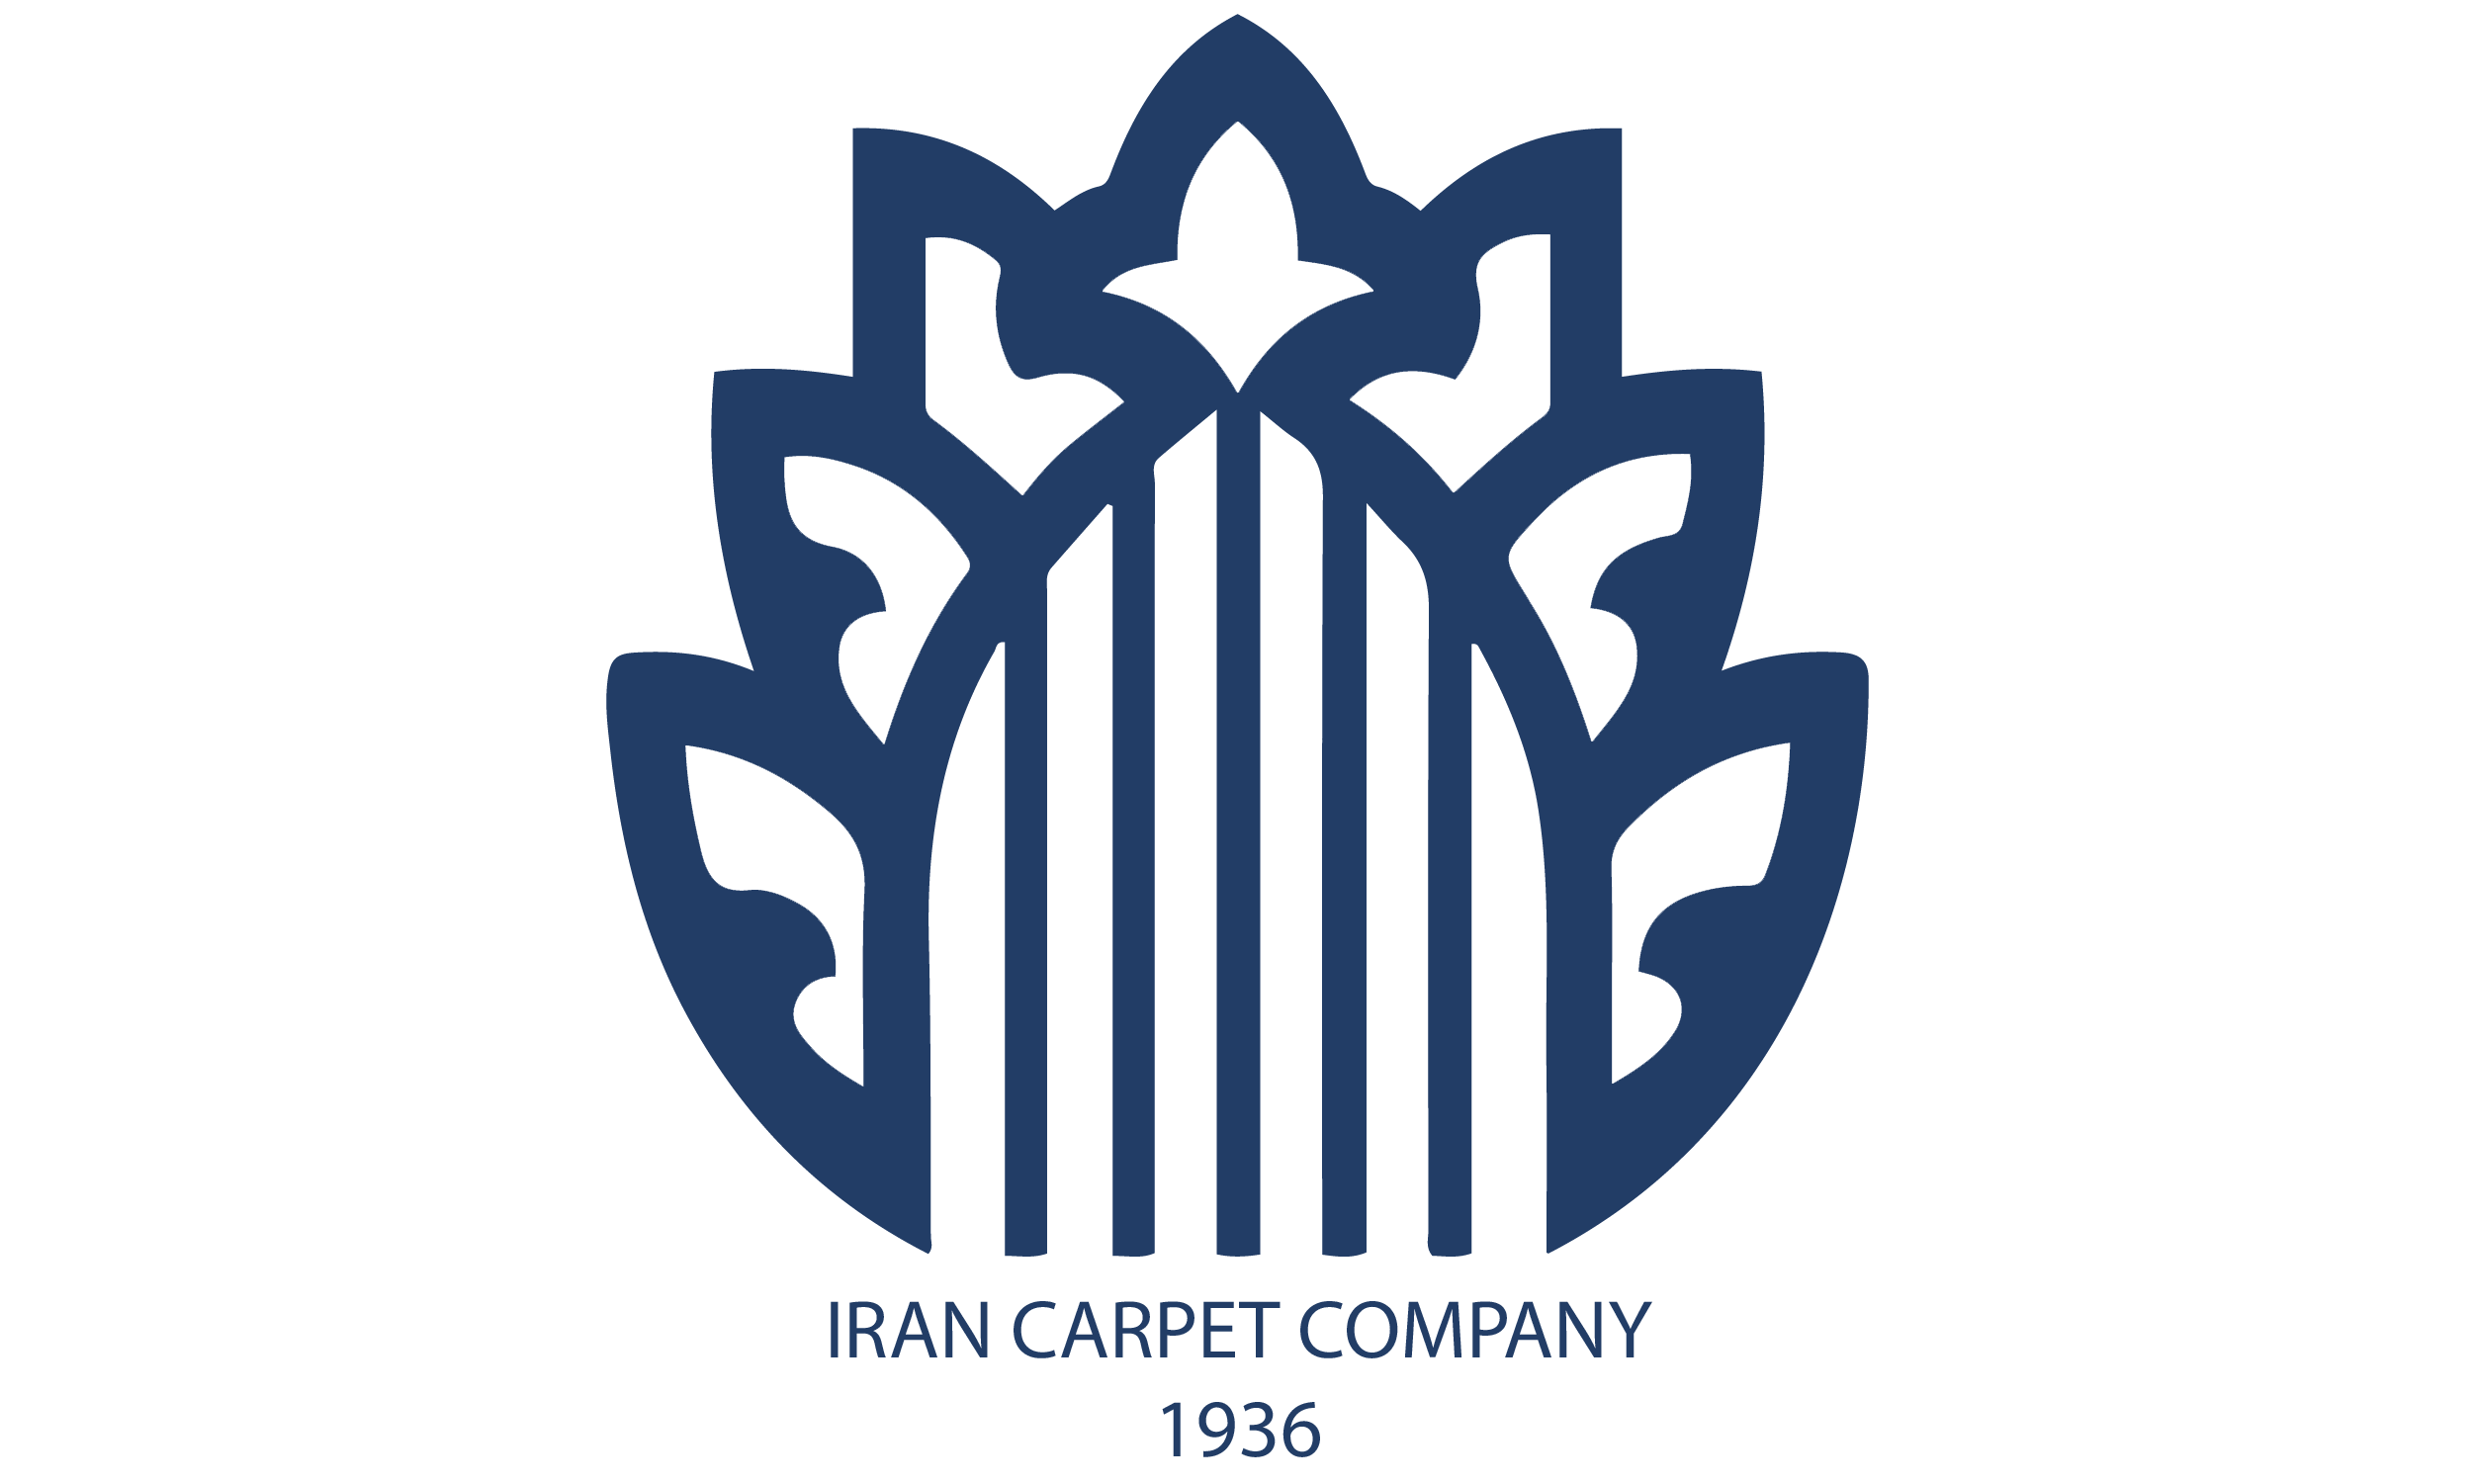 The Iran Carpet Company